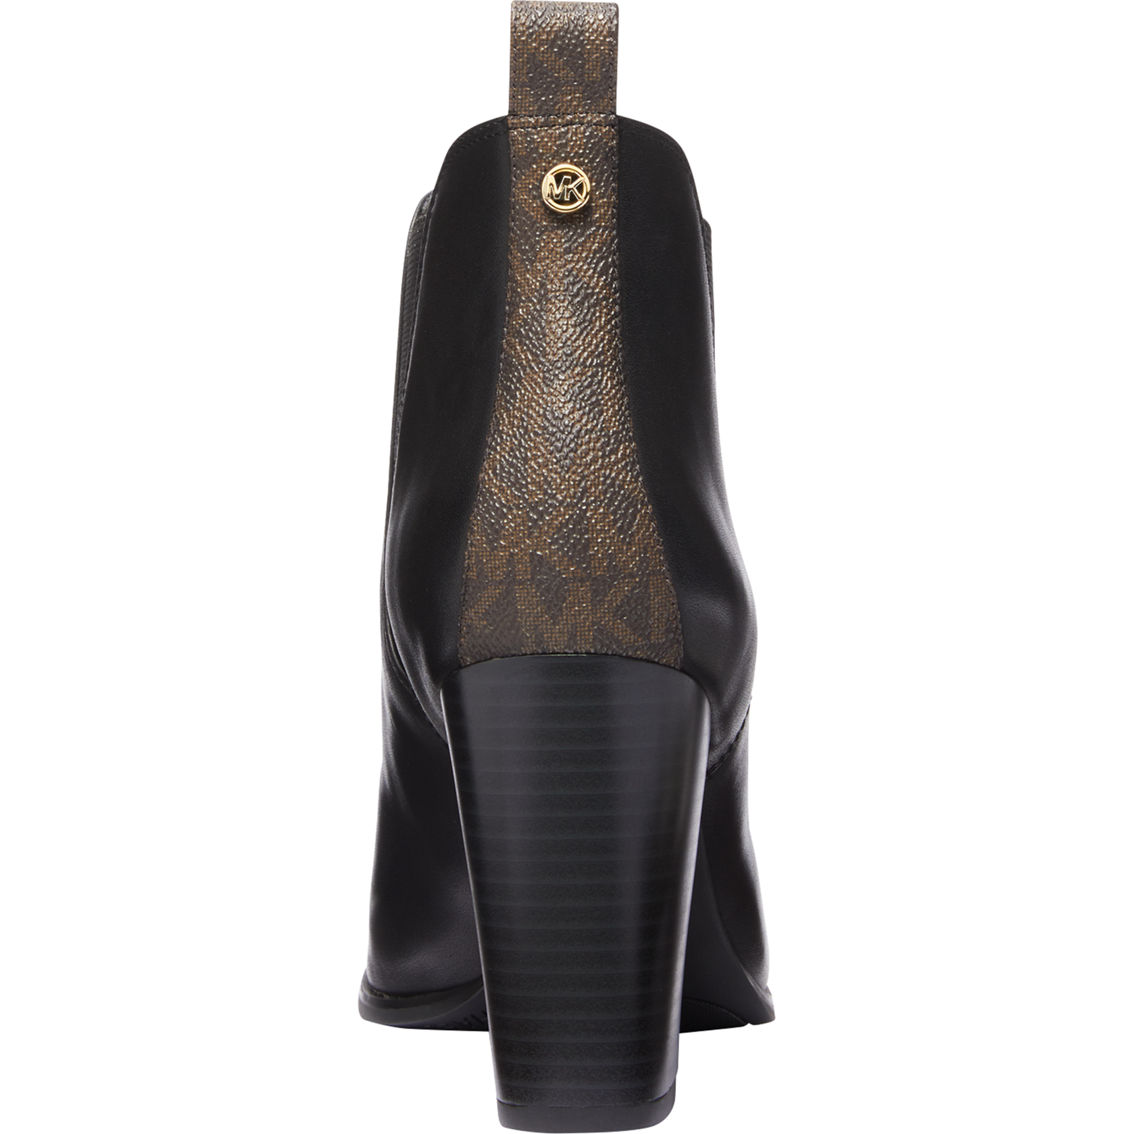 Michael Kors Evaline Heeled Boots - Image 4 of 4